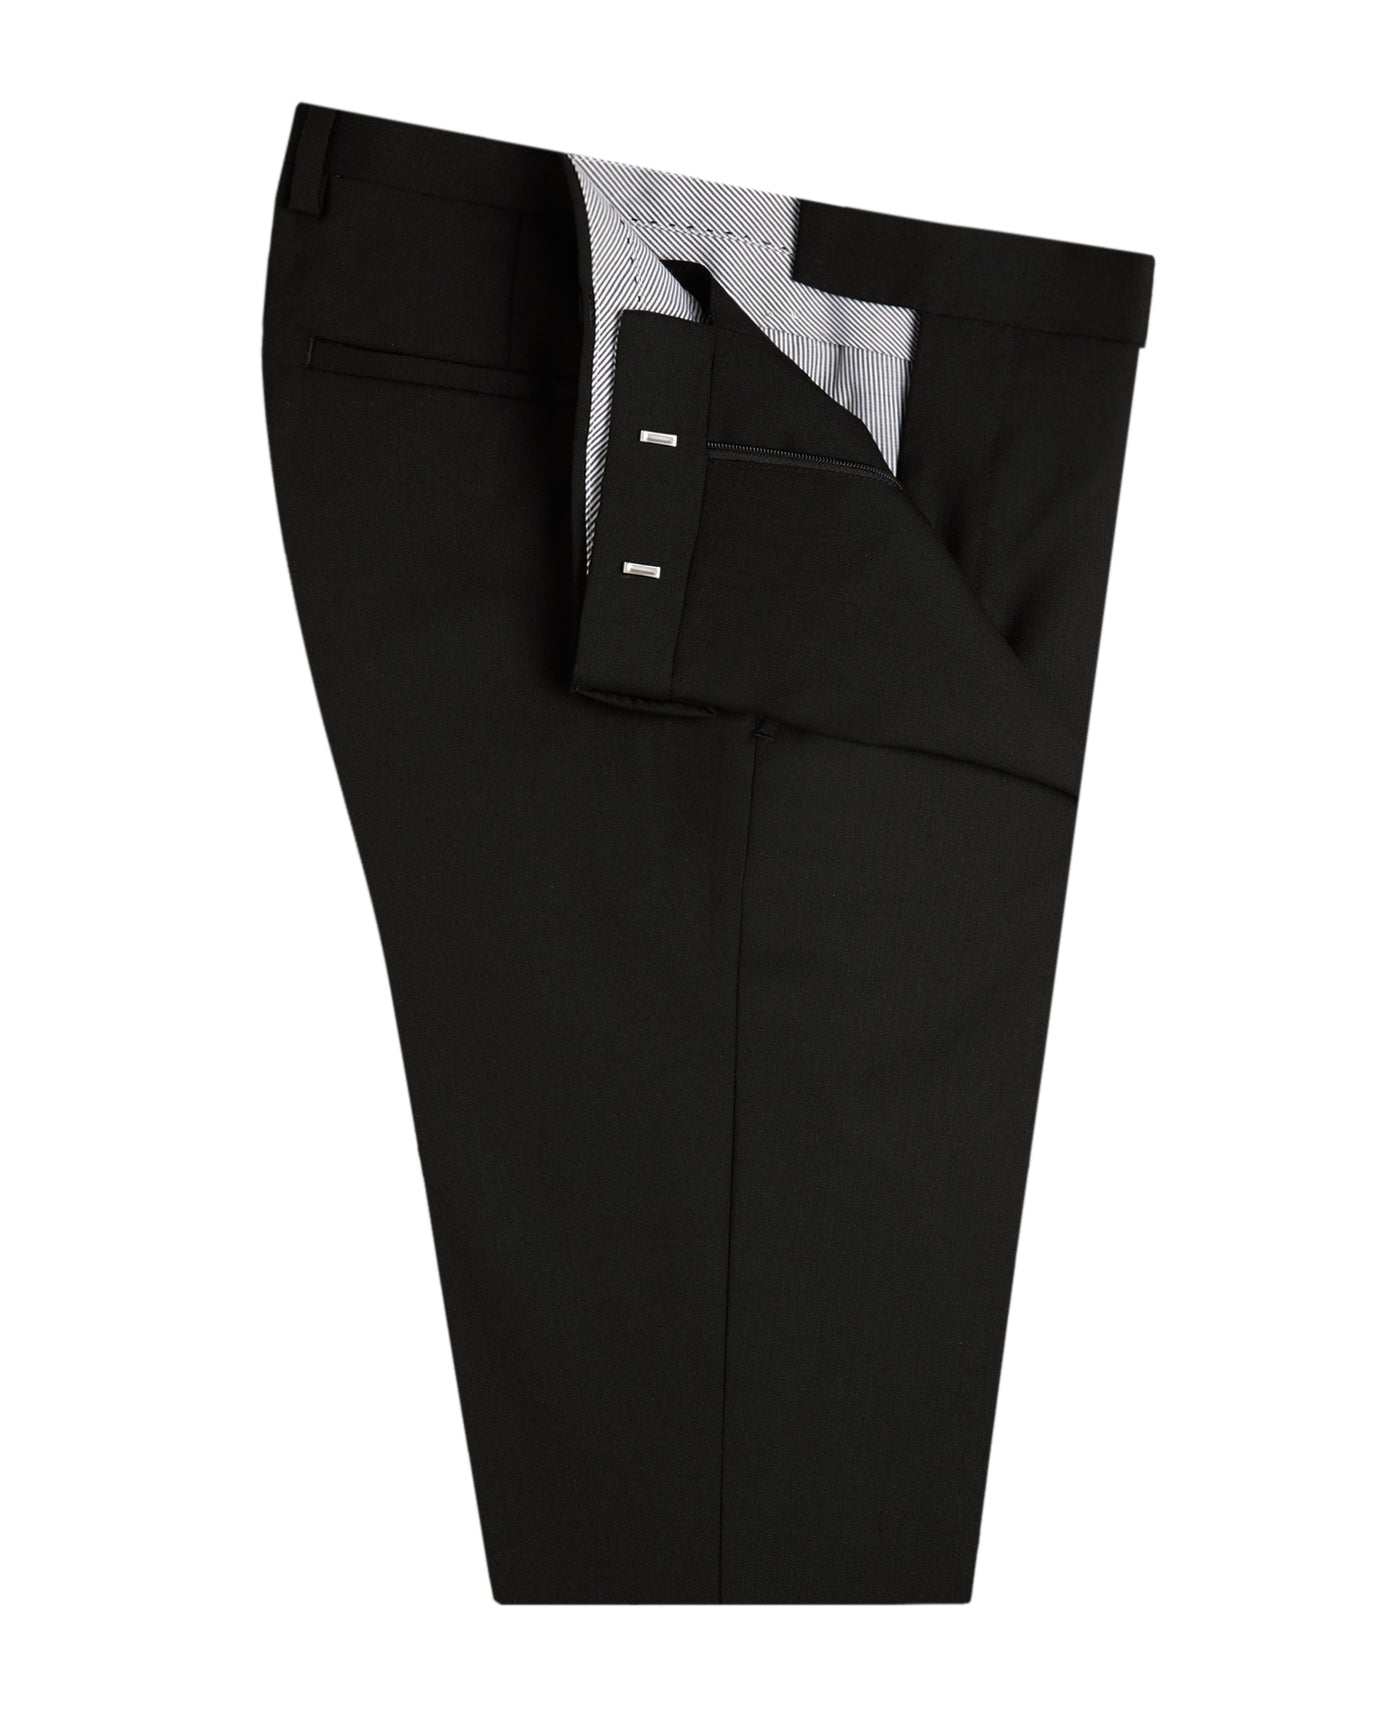 Image 1 of Aldwych Barberis Slim Fit Plain Black Trousers